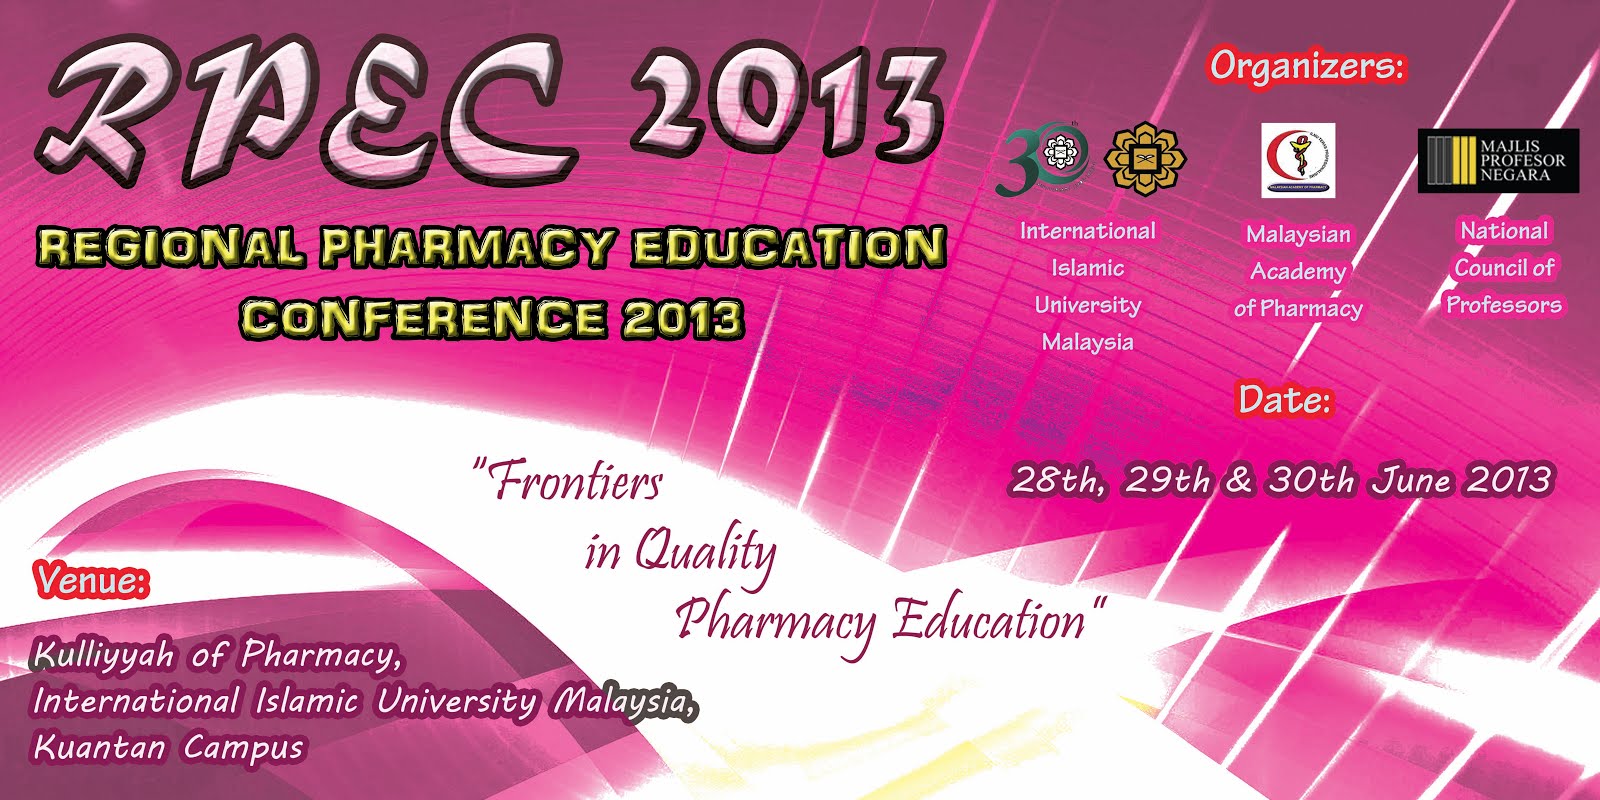 Regional Pharmacy Education Conference 2013